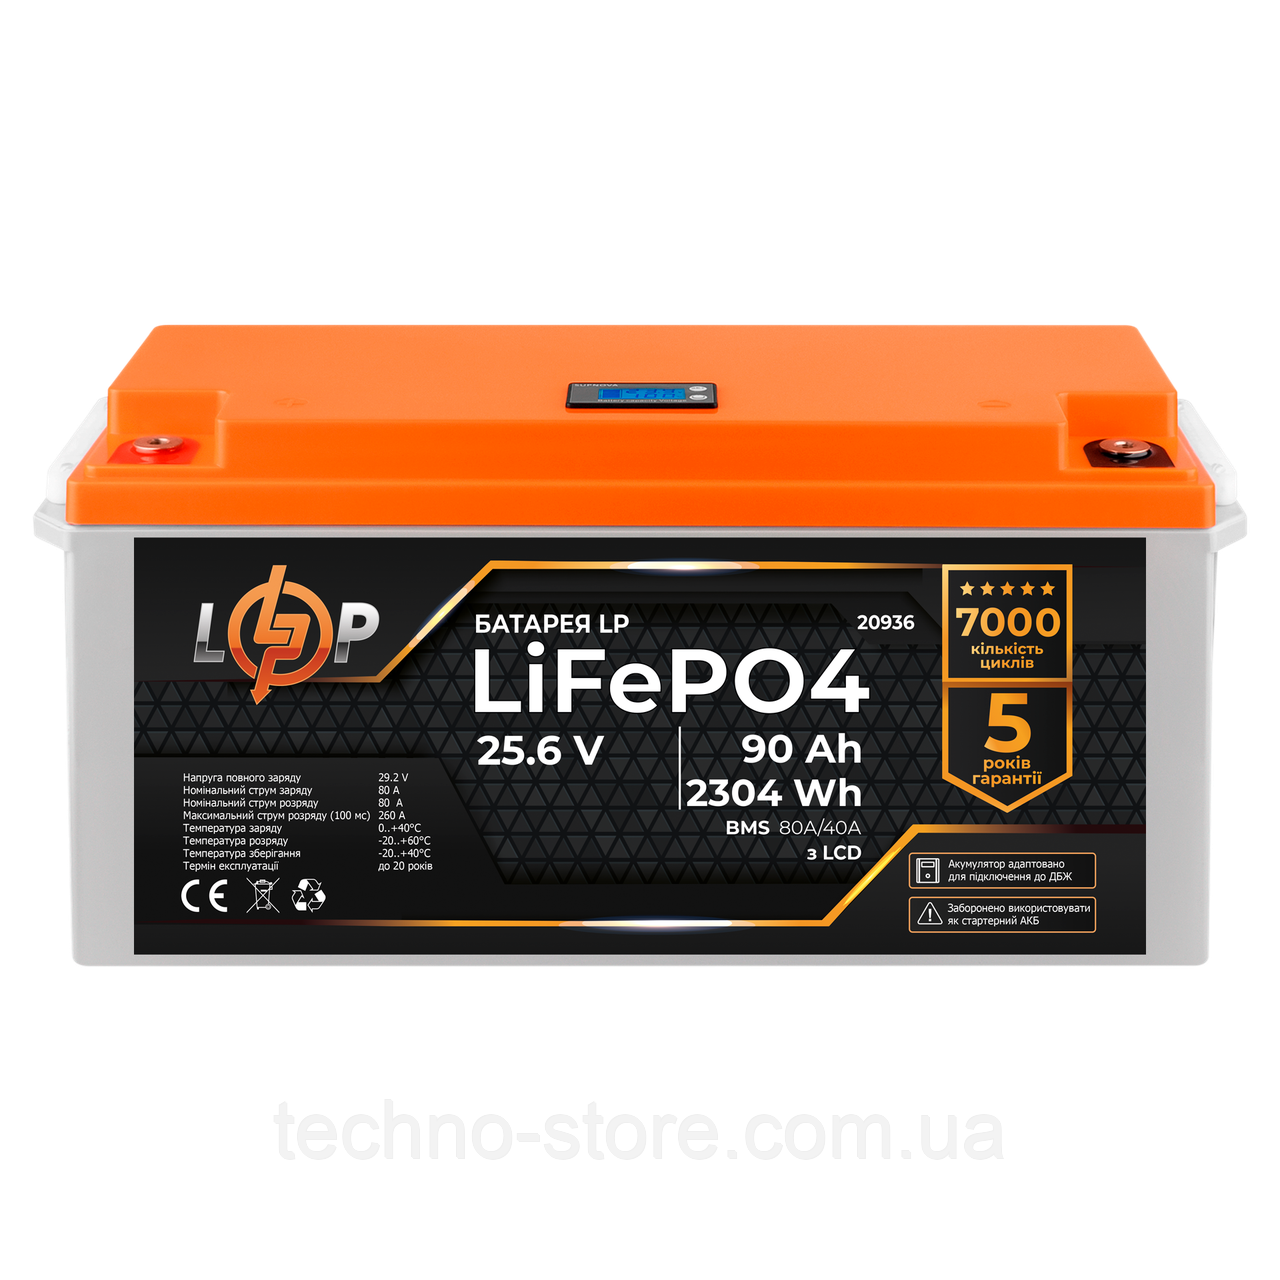 Акумулятор LP LiFePO4 для ДБЖ LCD 24V (25,6V) - 90 Ah (2304Wh) (BMS 80A/40A) пластик